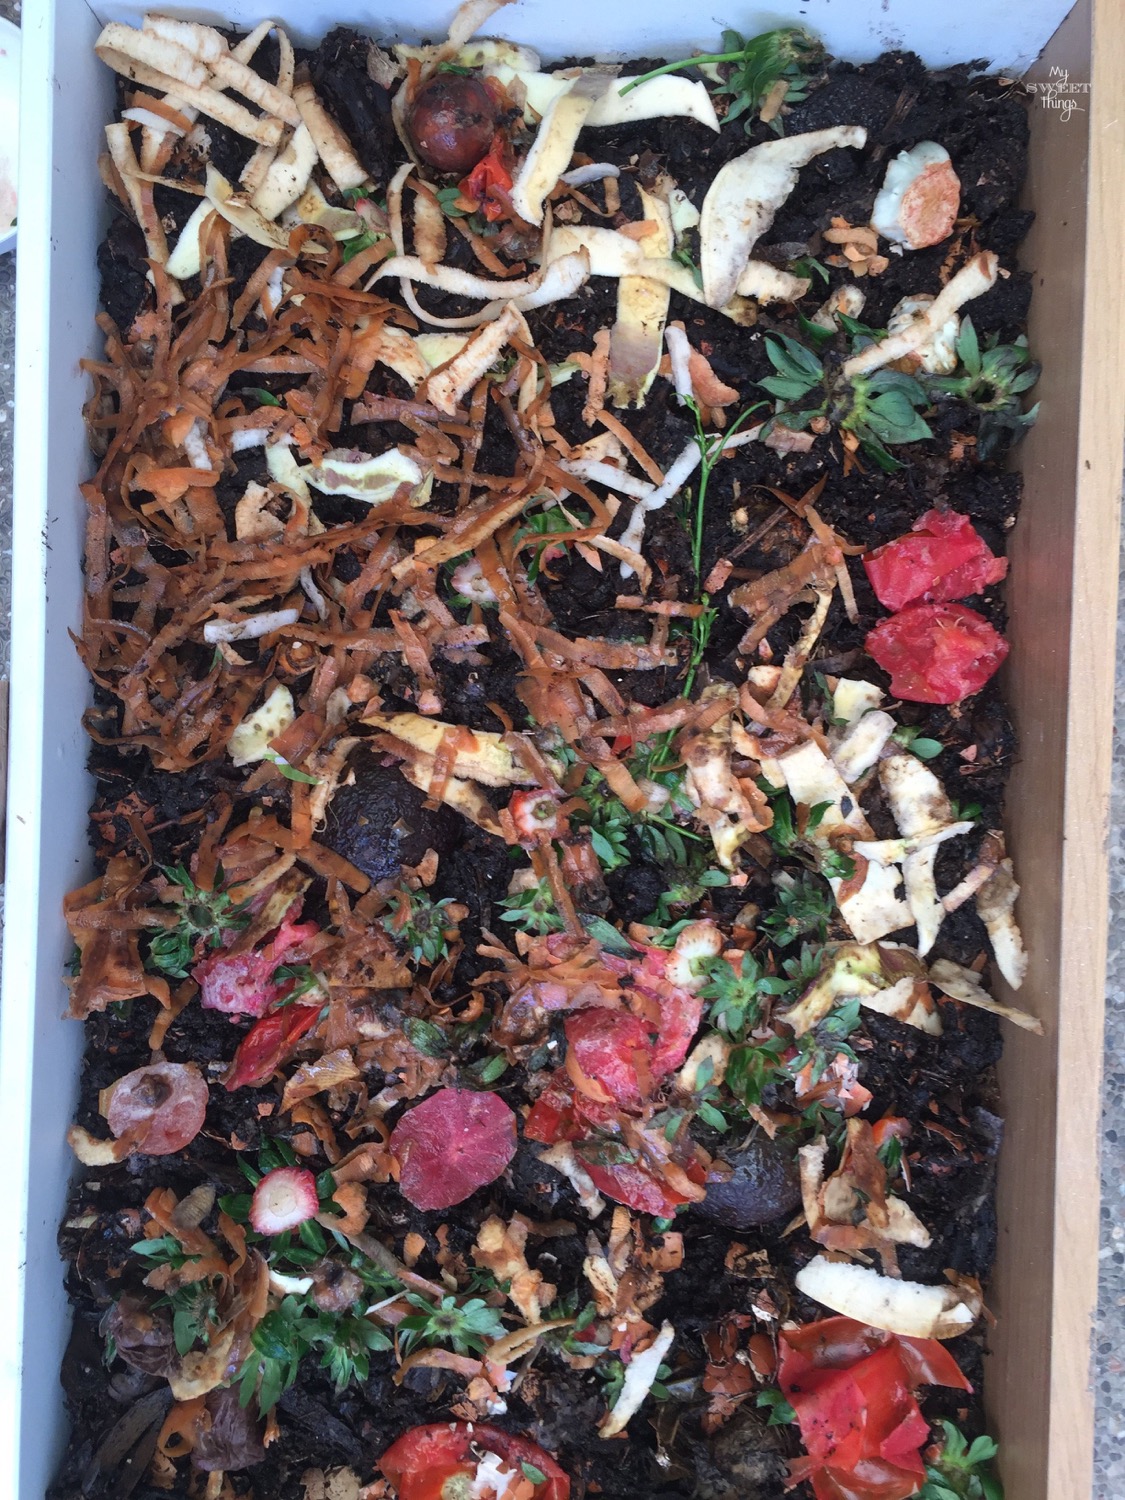 DIY Worm Compost Bin for vermicomposting · Via www.sweethings.net #compost #hummus #compostin #vermicomposting